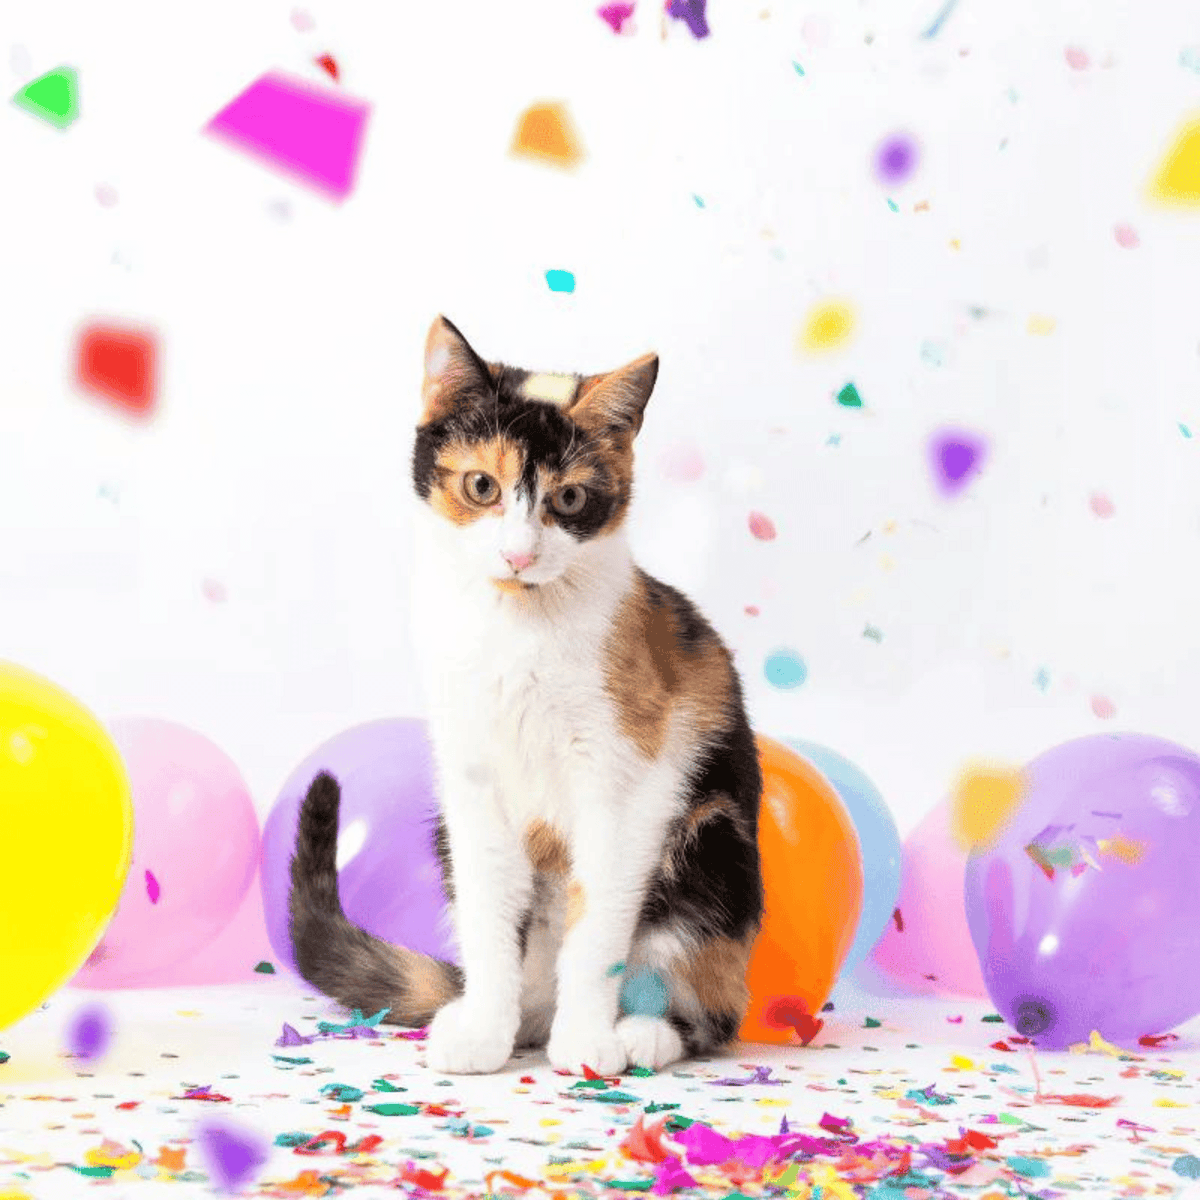 Cat Birthday Ice Cream Party Package, Cat Treats, Cat Toys